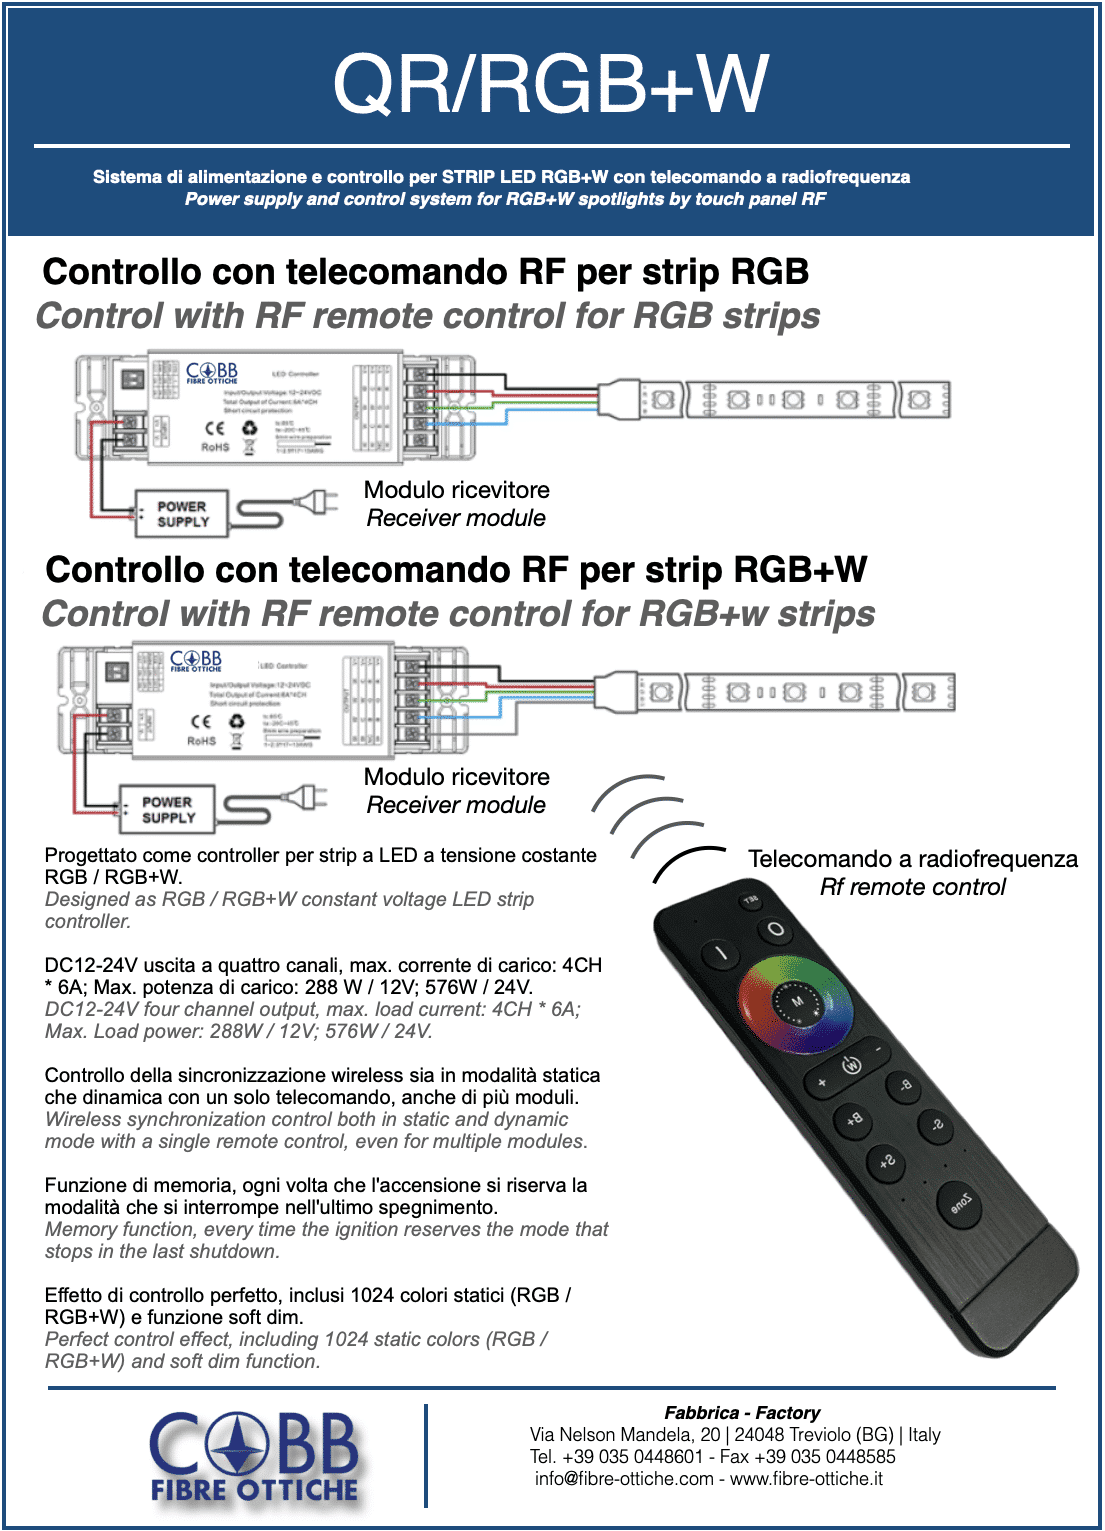 Cobb Fibre Ottiche | QR/RGB+W/CONTROL STRIP RGB+W